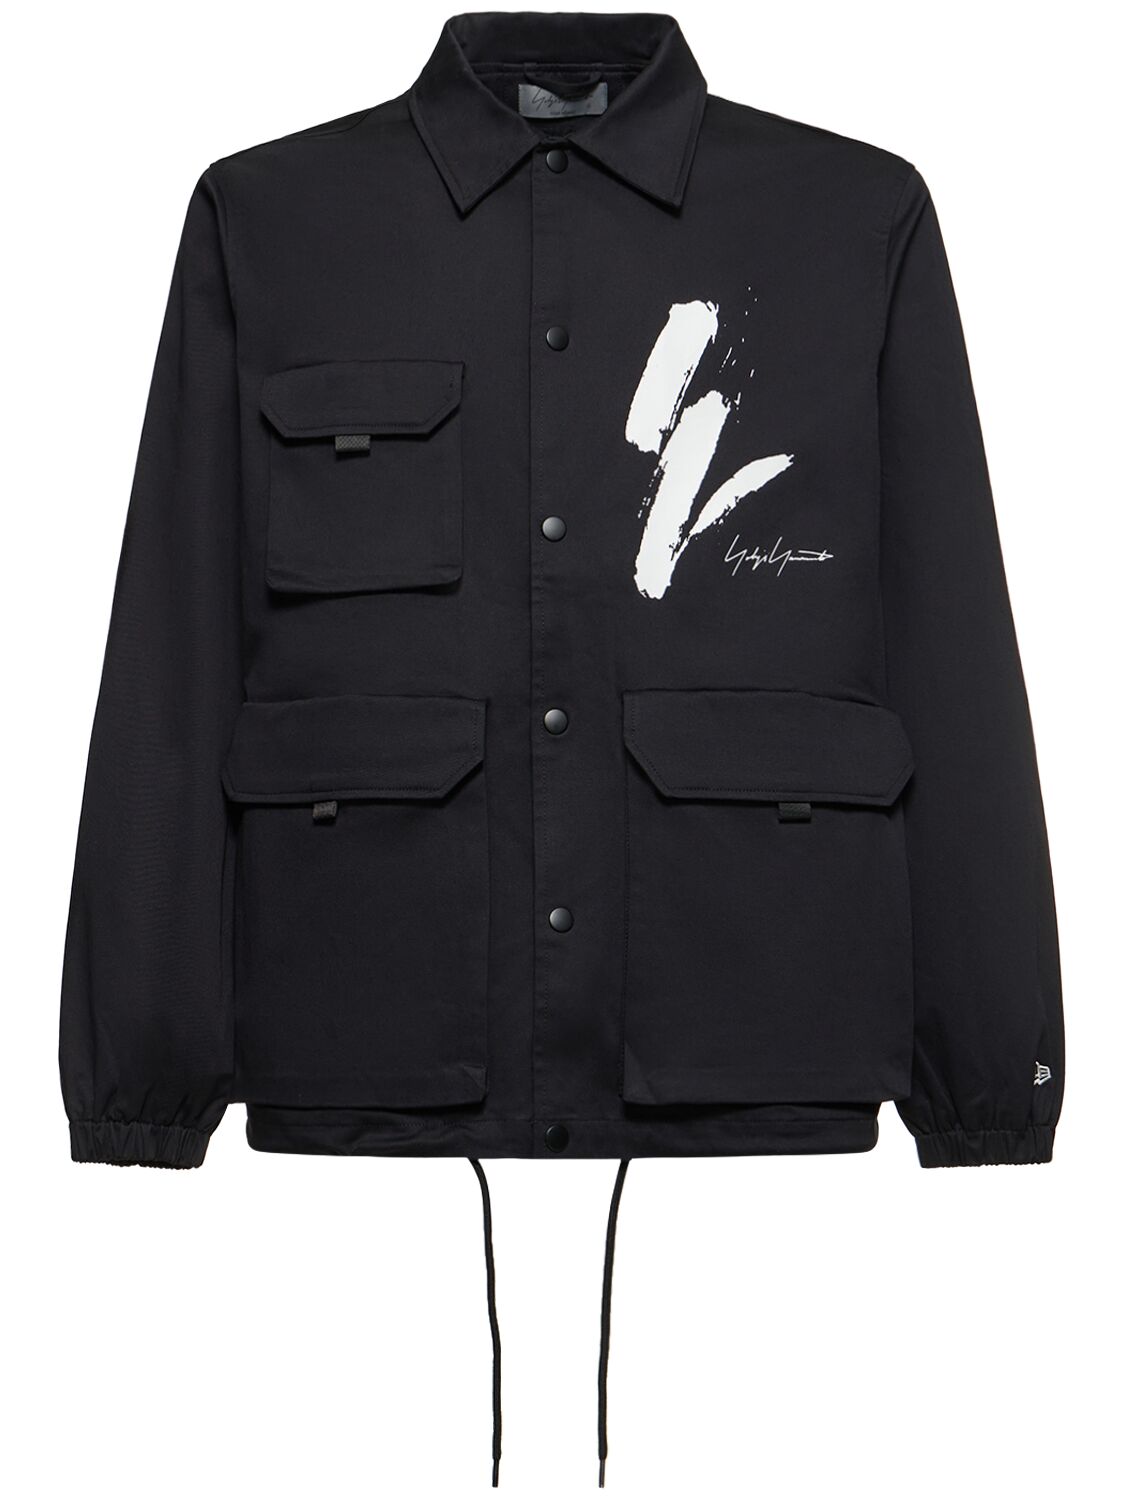 Yohji Yamamoto New Era Field Coach Jacket In Black